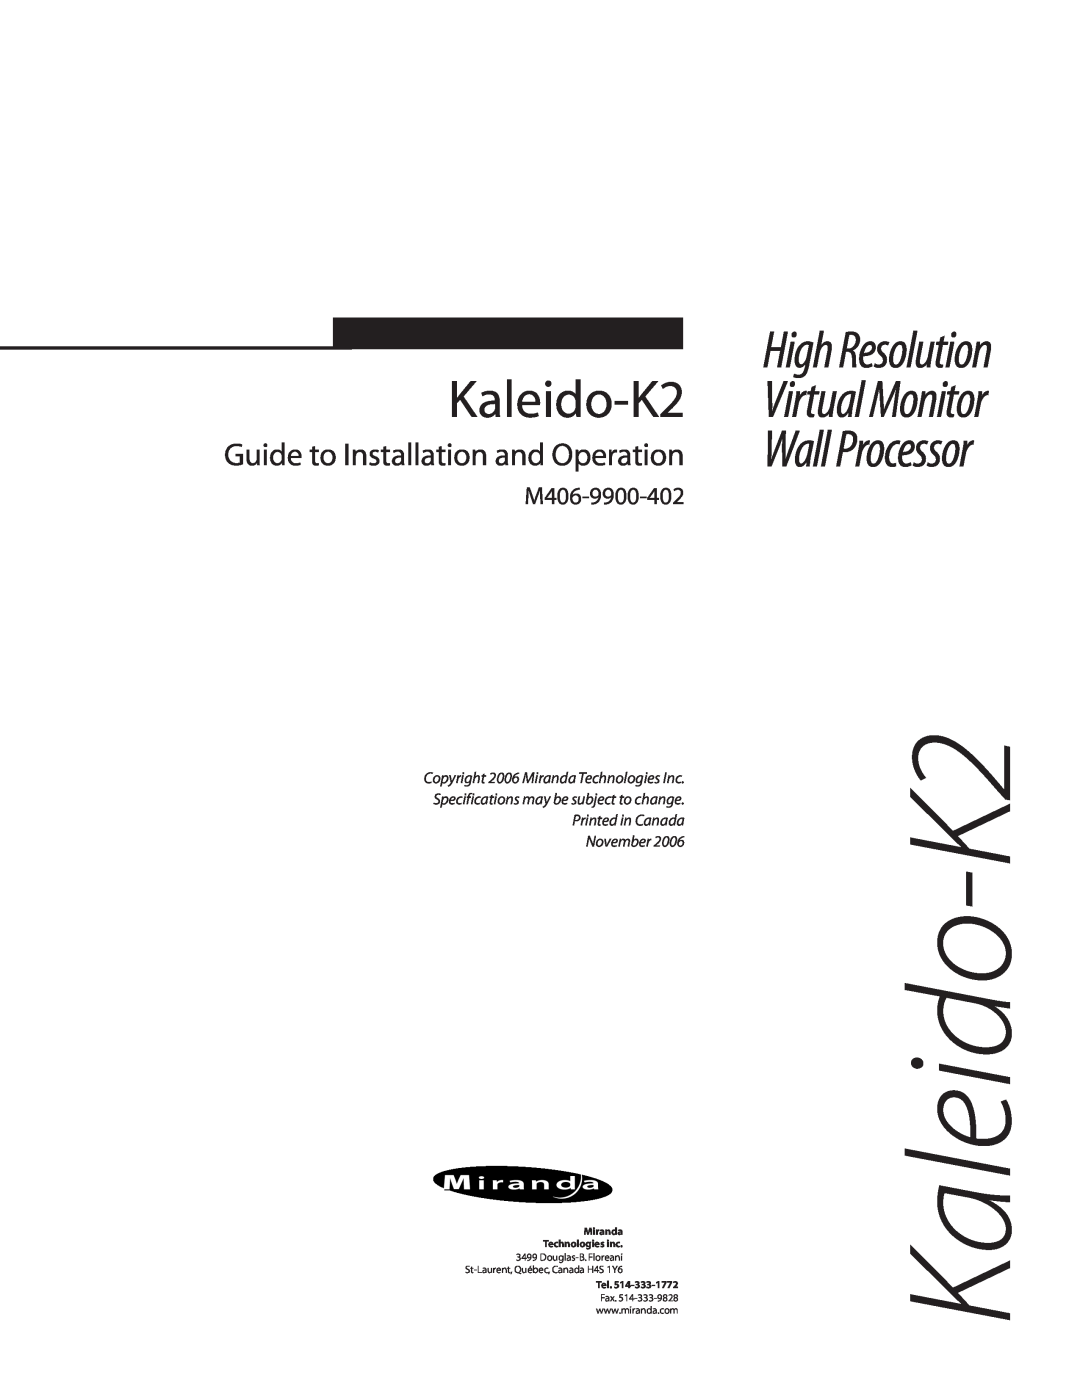 Miranda Camera Co KALEIDO-K2 specifications Kaleido-K2, Virtual Monitor, Wall Processor, High Resolution, M406-9900-402 